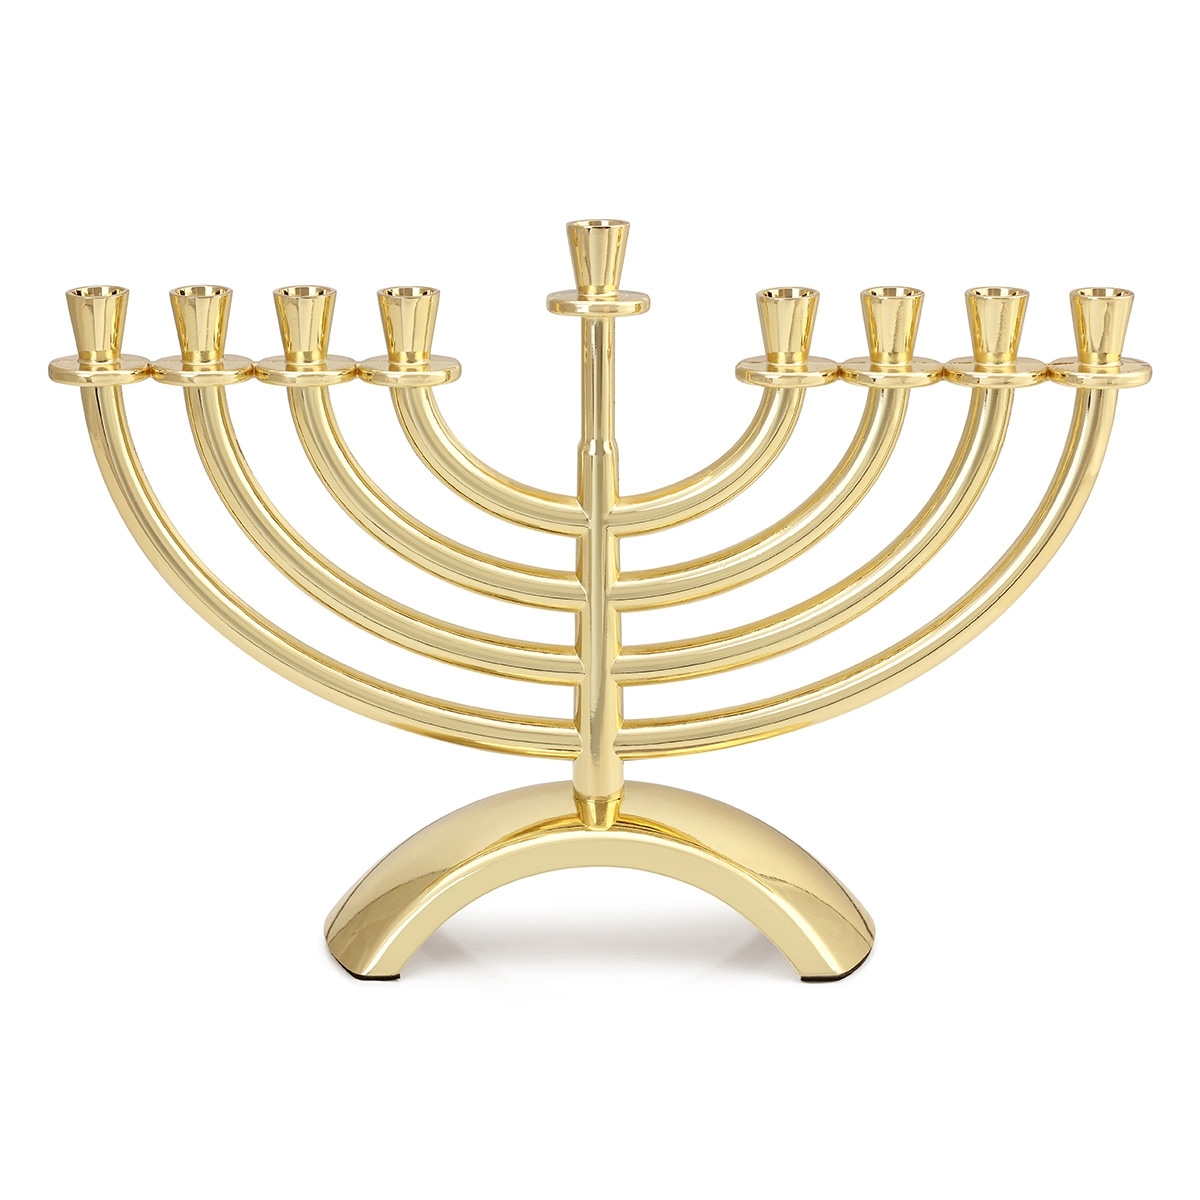 Classic Silver or Gold Plated Hanukkah Menorah - 1